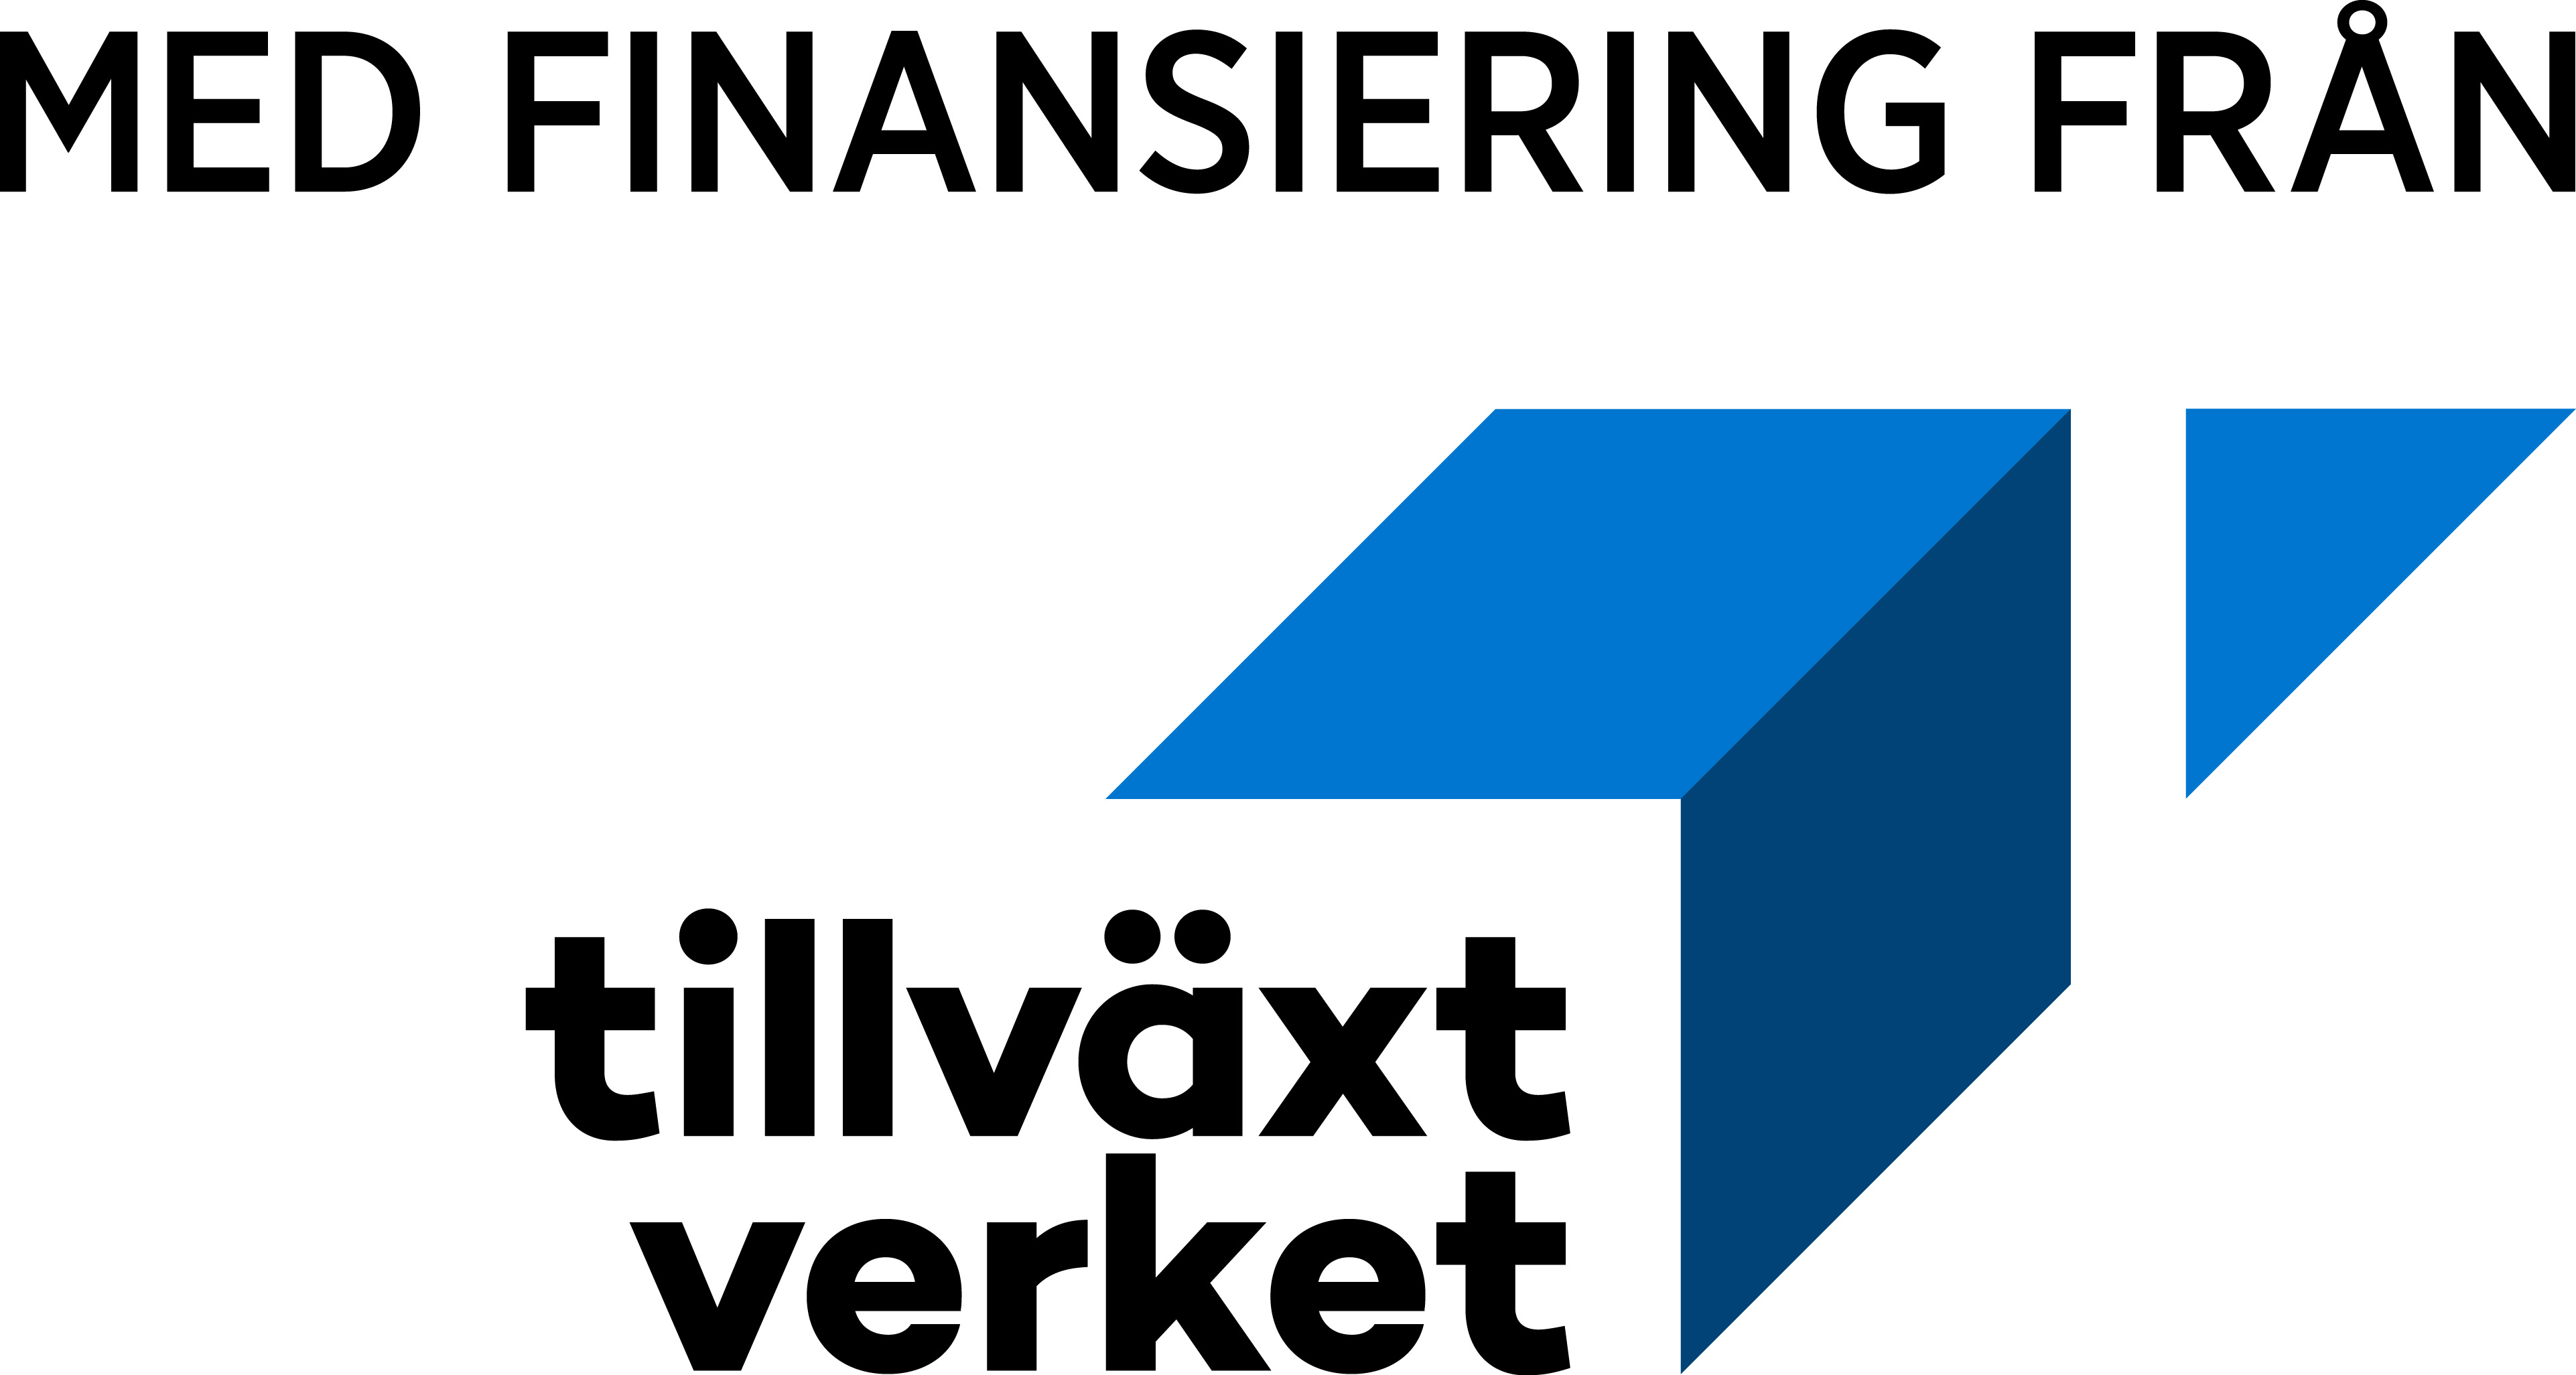 With funding from Tillväxtverket